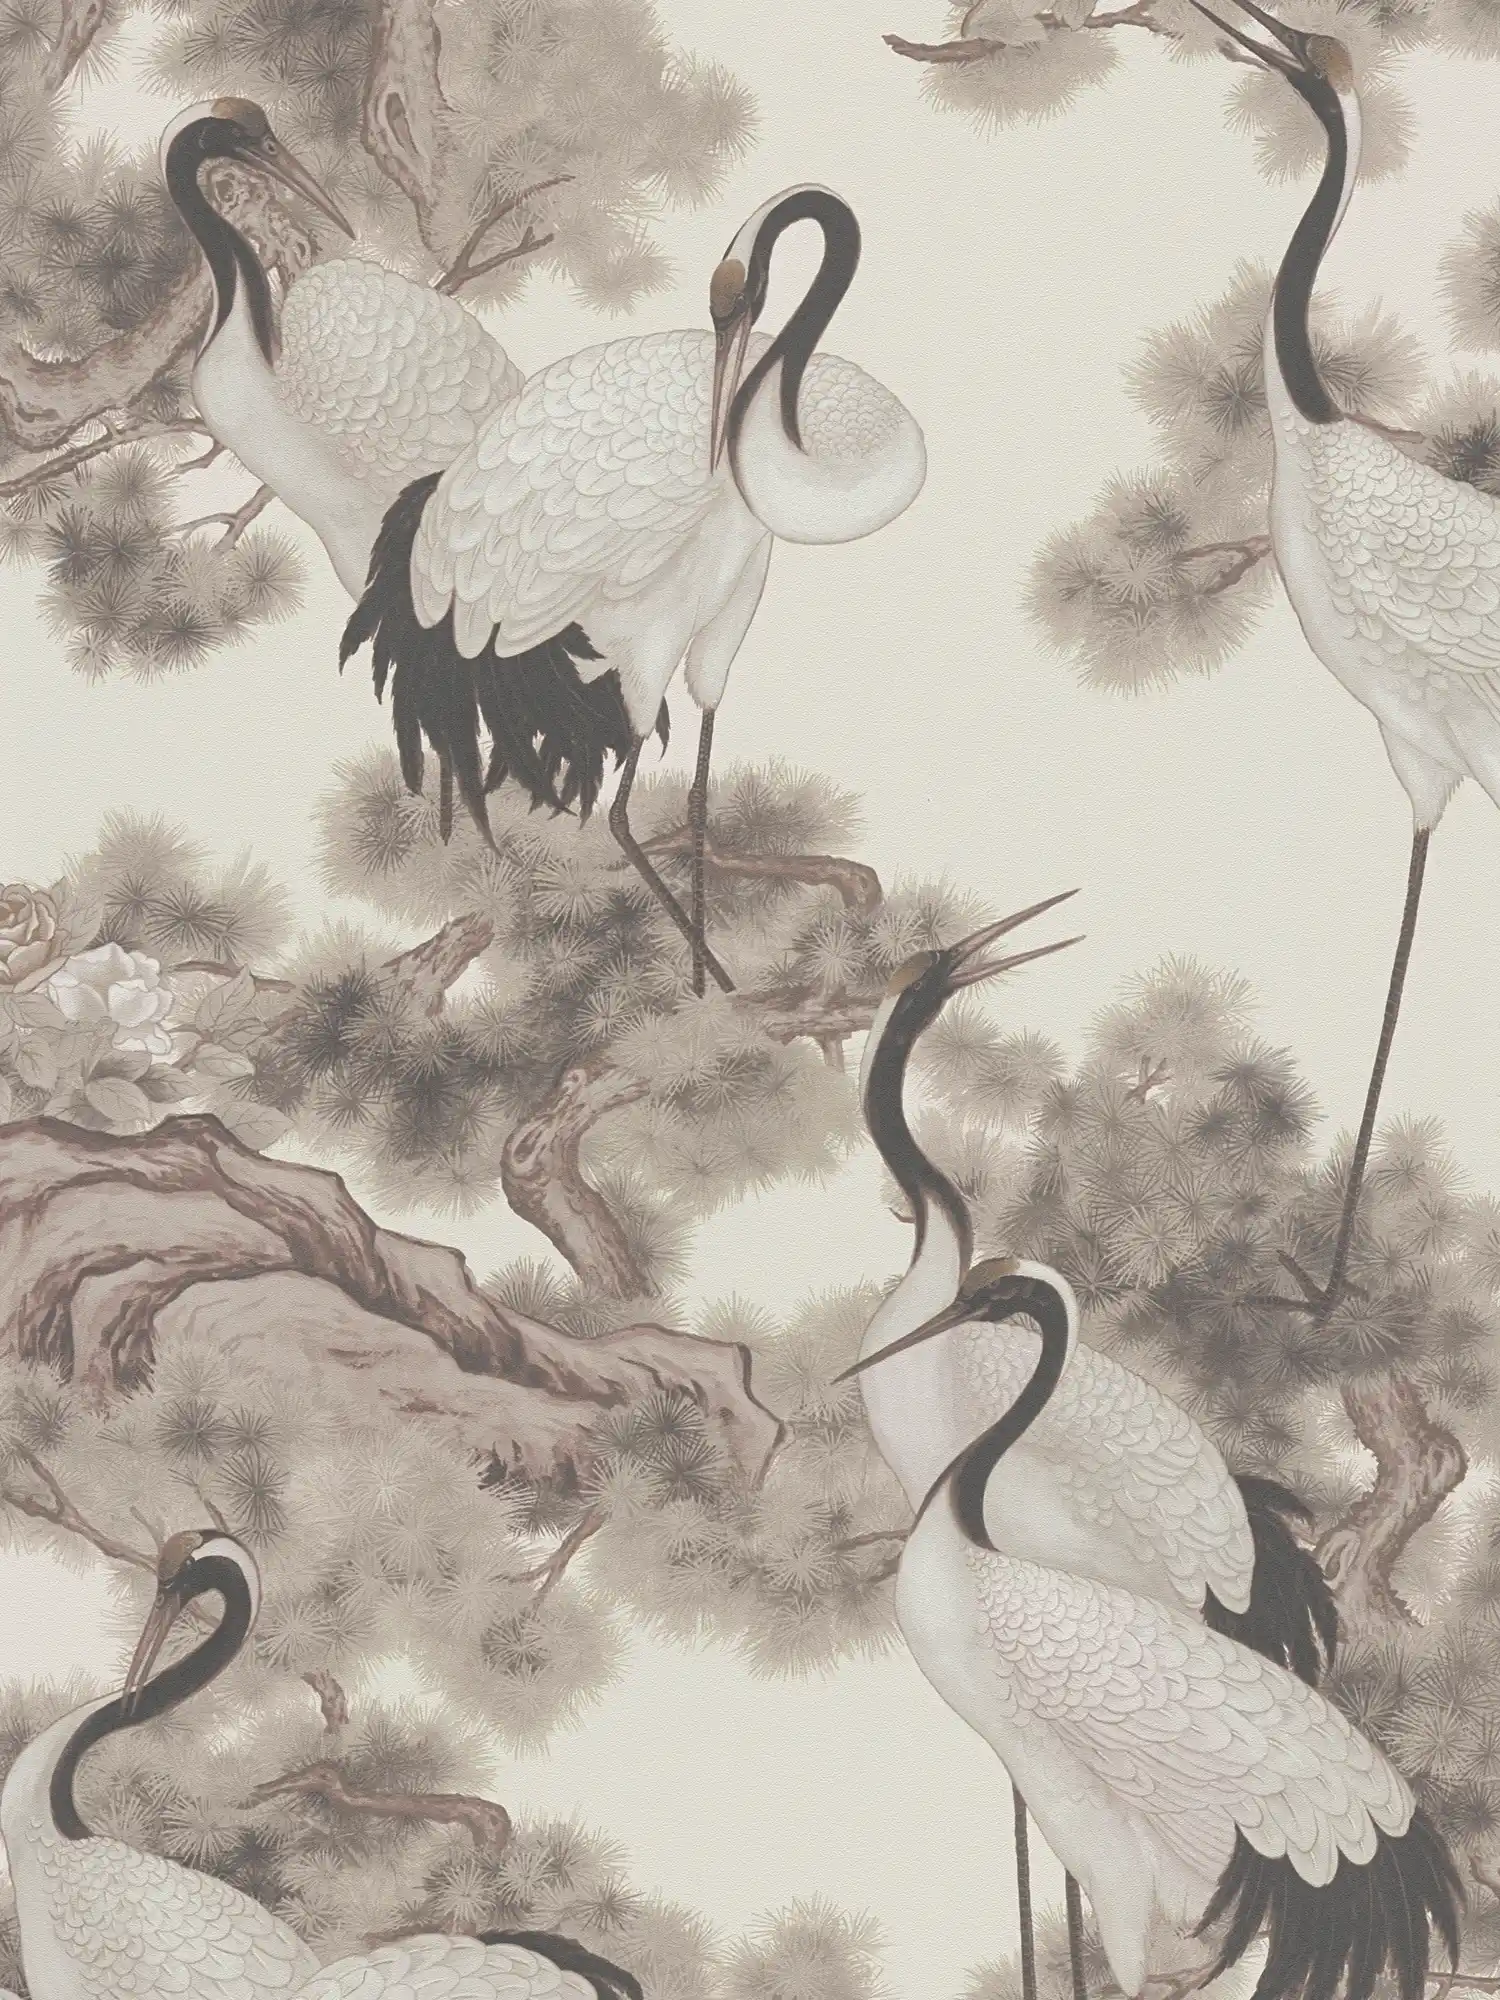 Japan wallpaper cranes in Asian style - cream, grey
